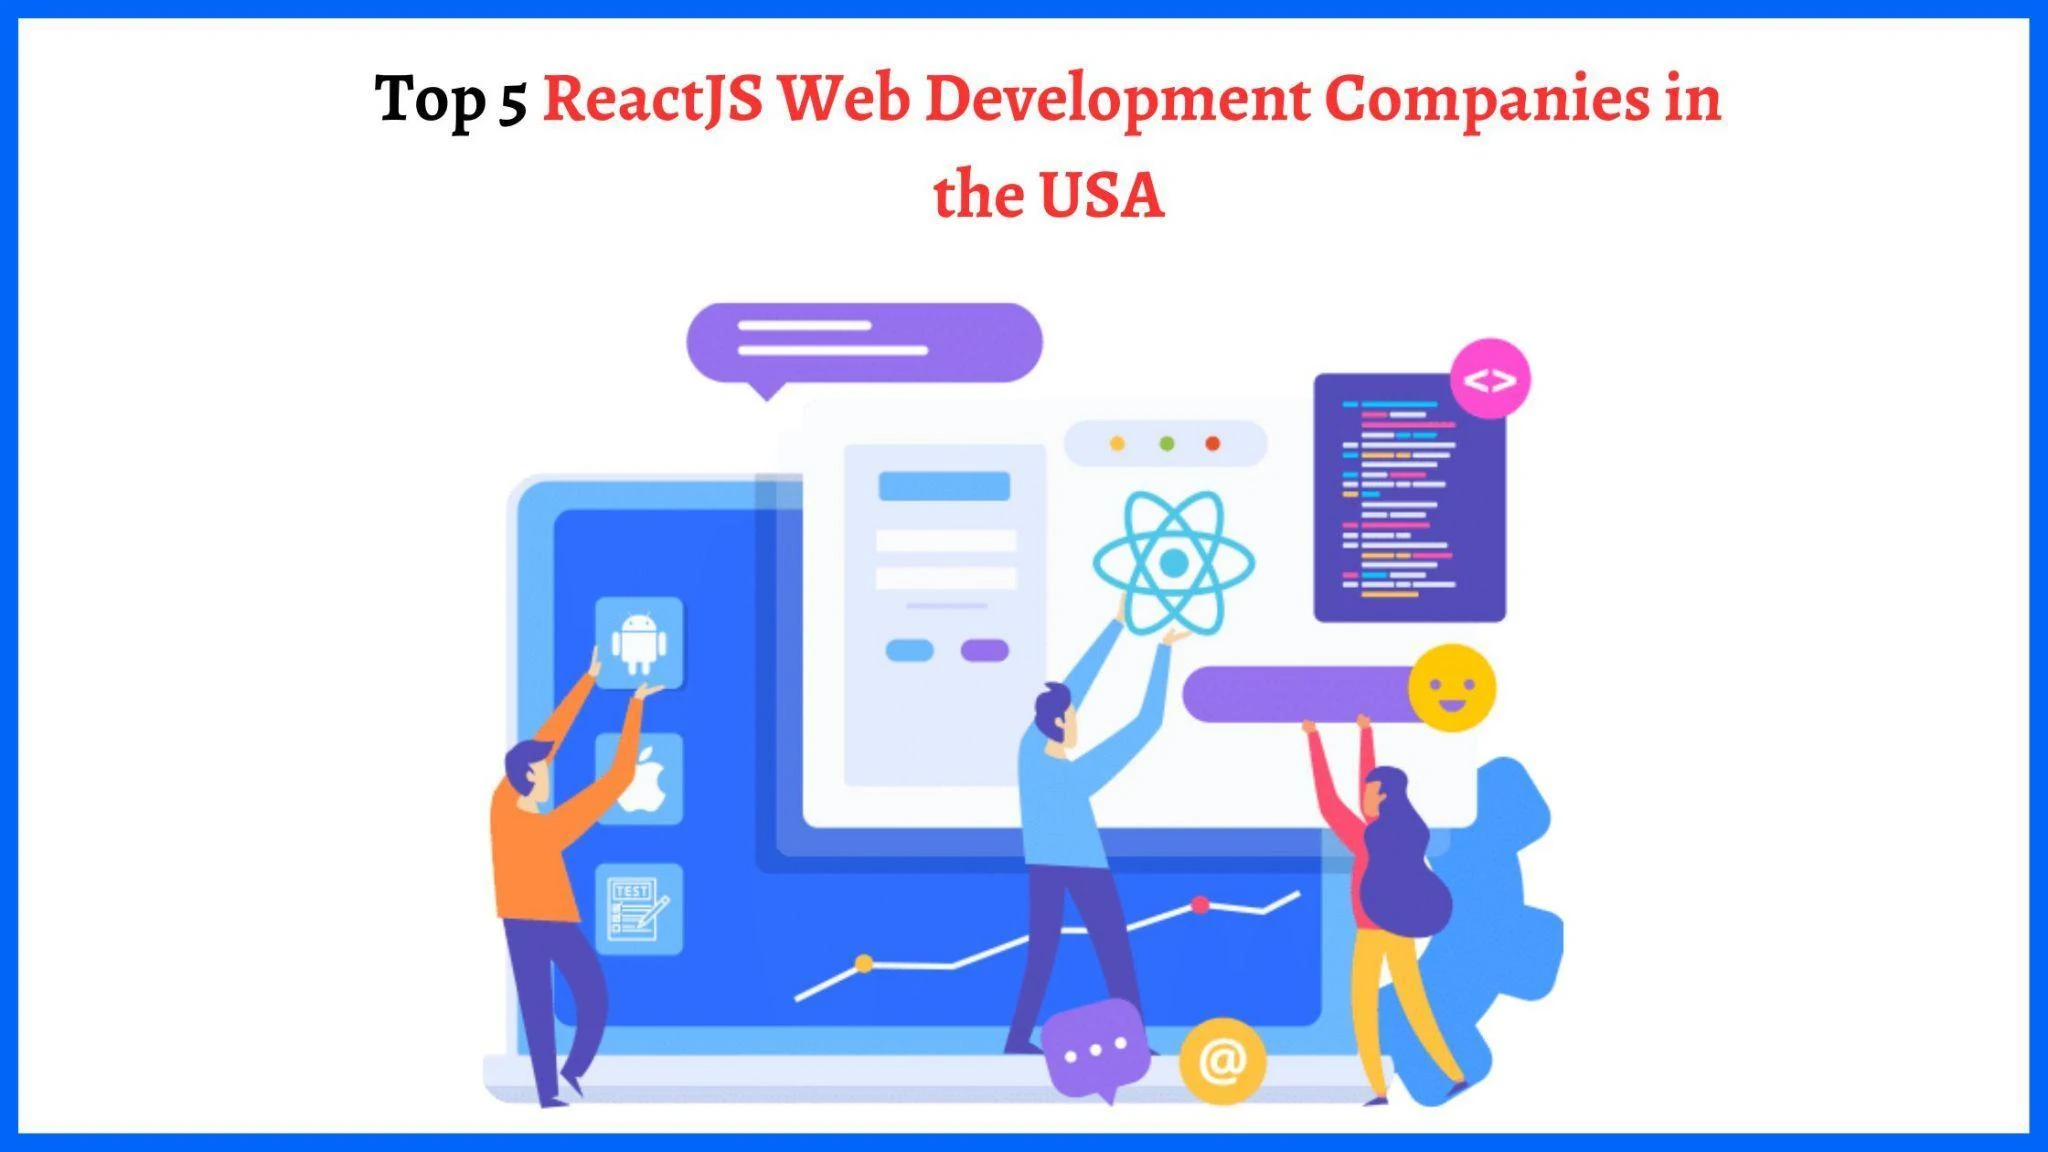 Top 5 ReactJS Web Development Companies in USA